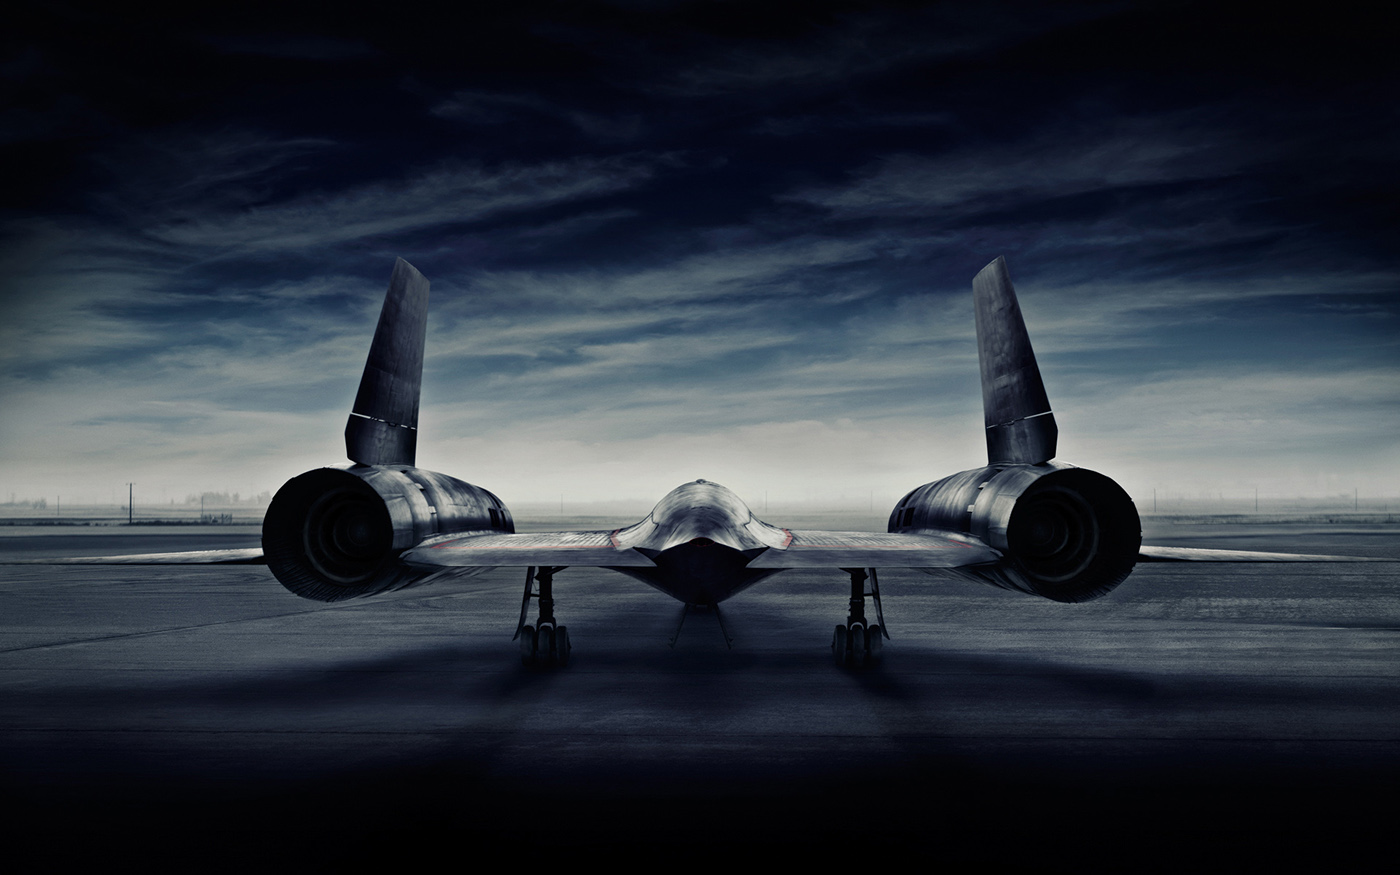 Advertising Photographer Automotive Photographer Sr-71 blackbird Military Jet